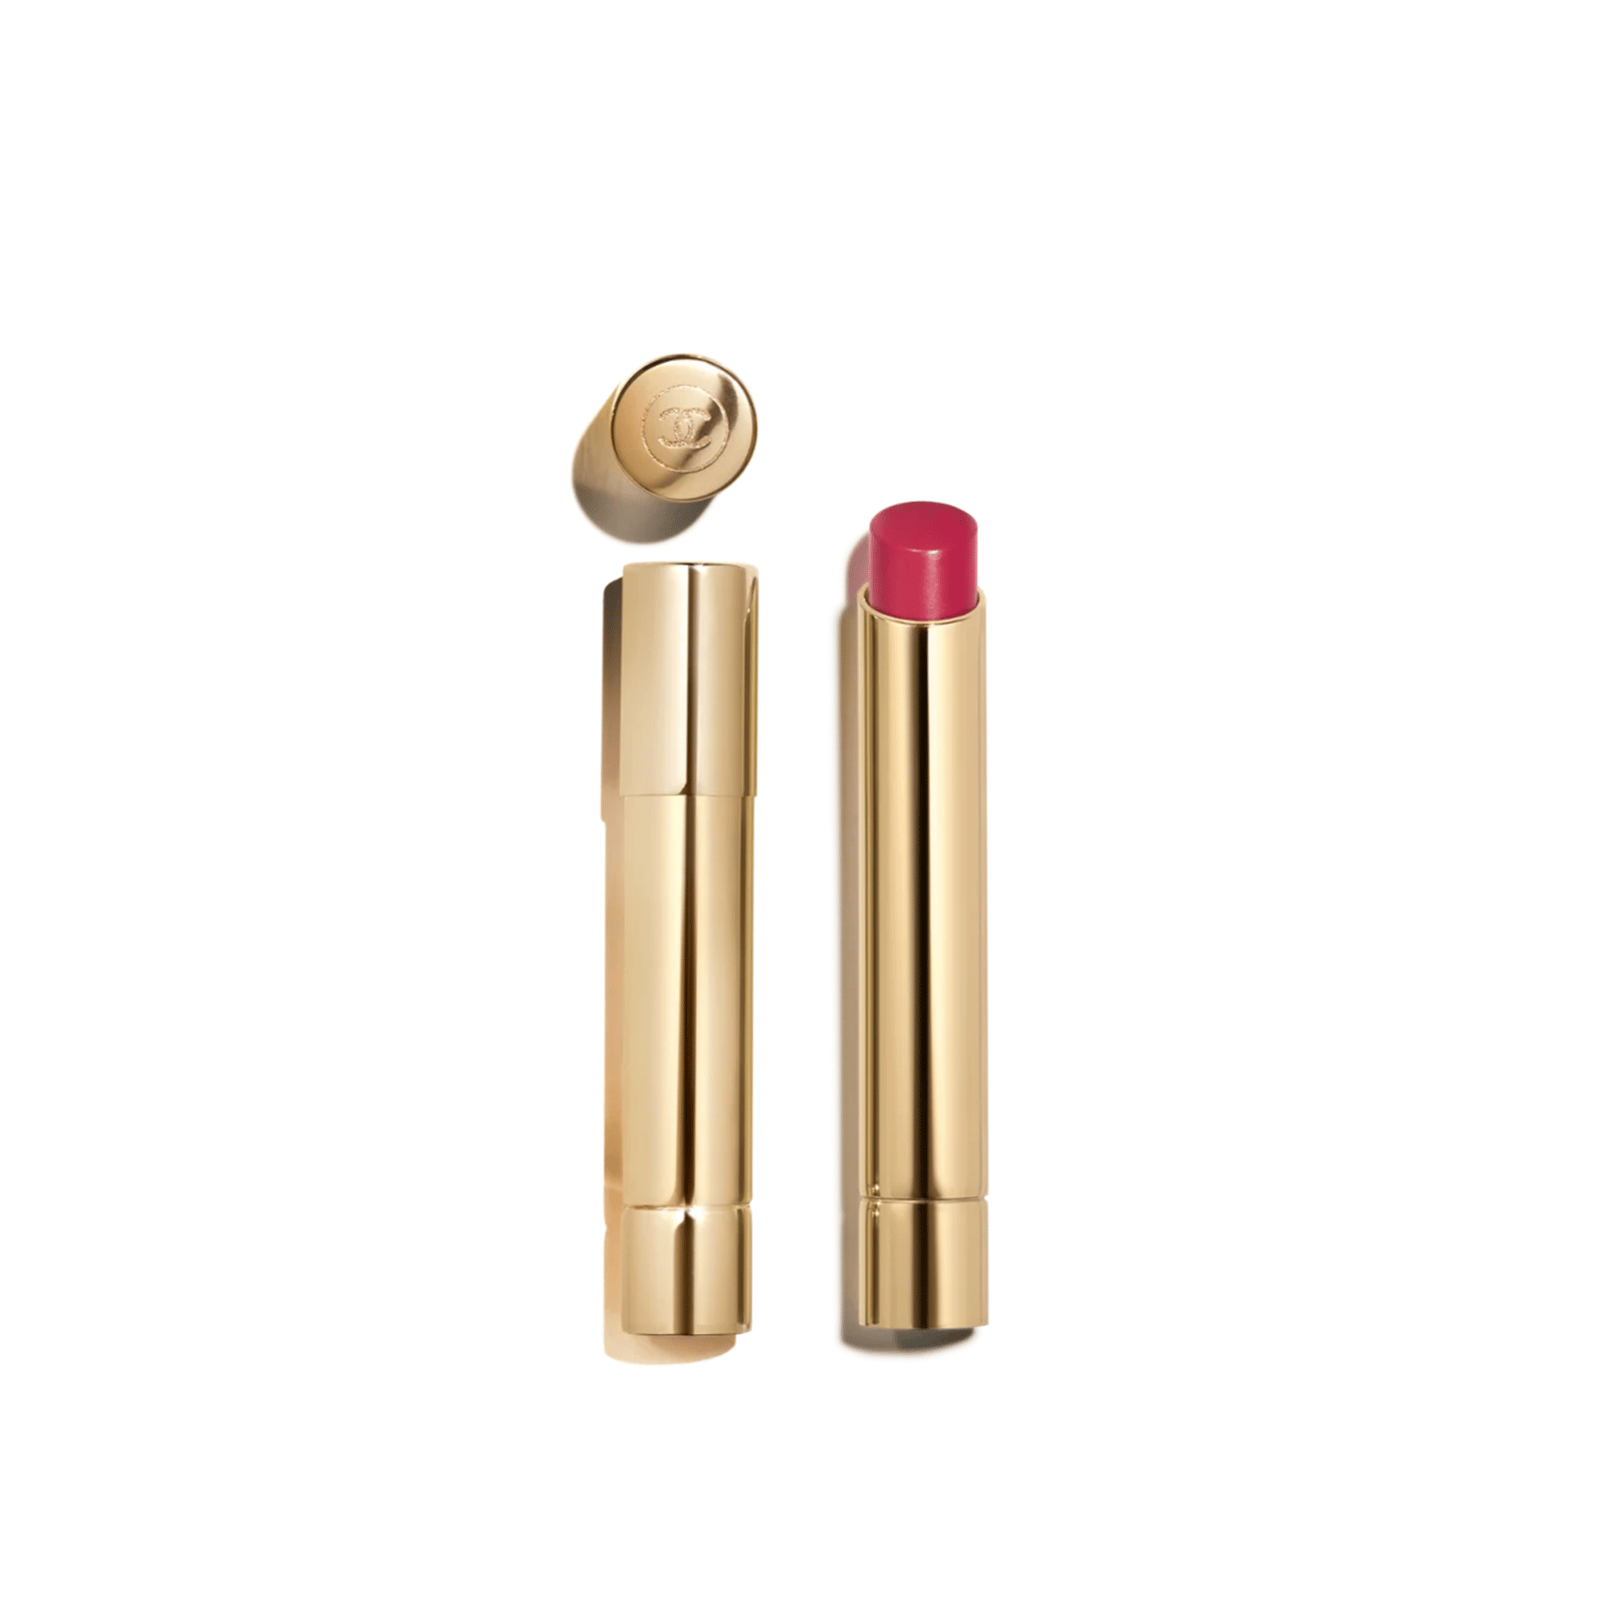 CHANEL Rouge Allure L'Extrait High-Intensity Lip Colour Refill 838 Rose Audacieux 2g (0.07 oz)